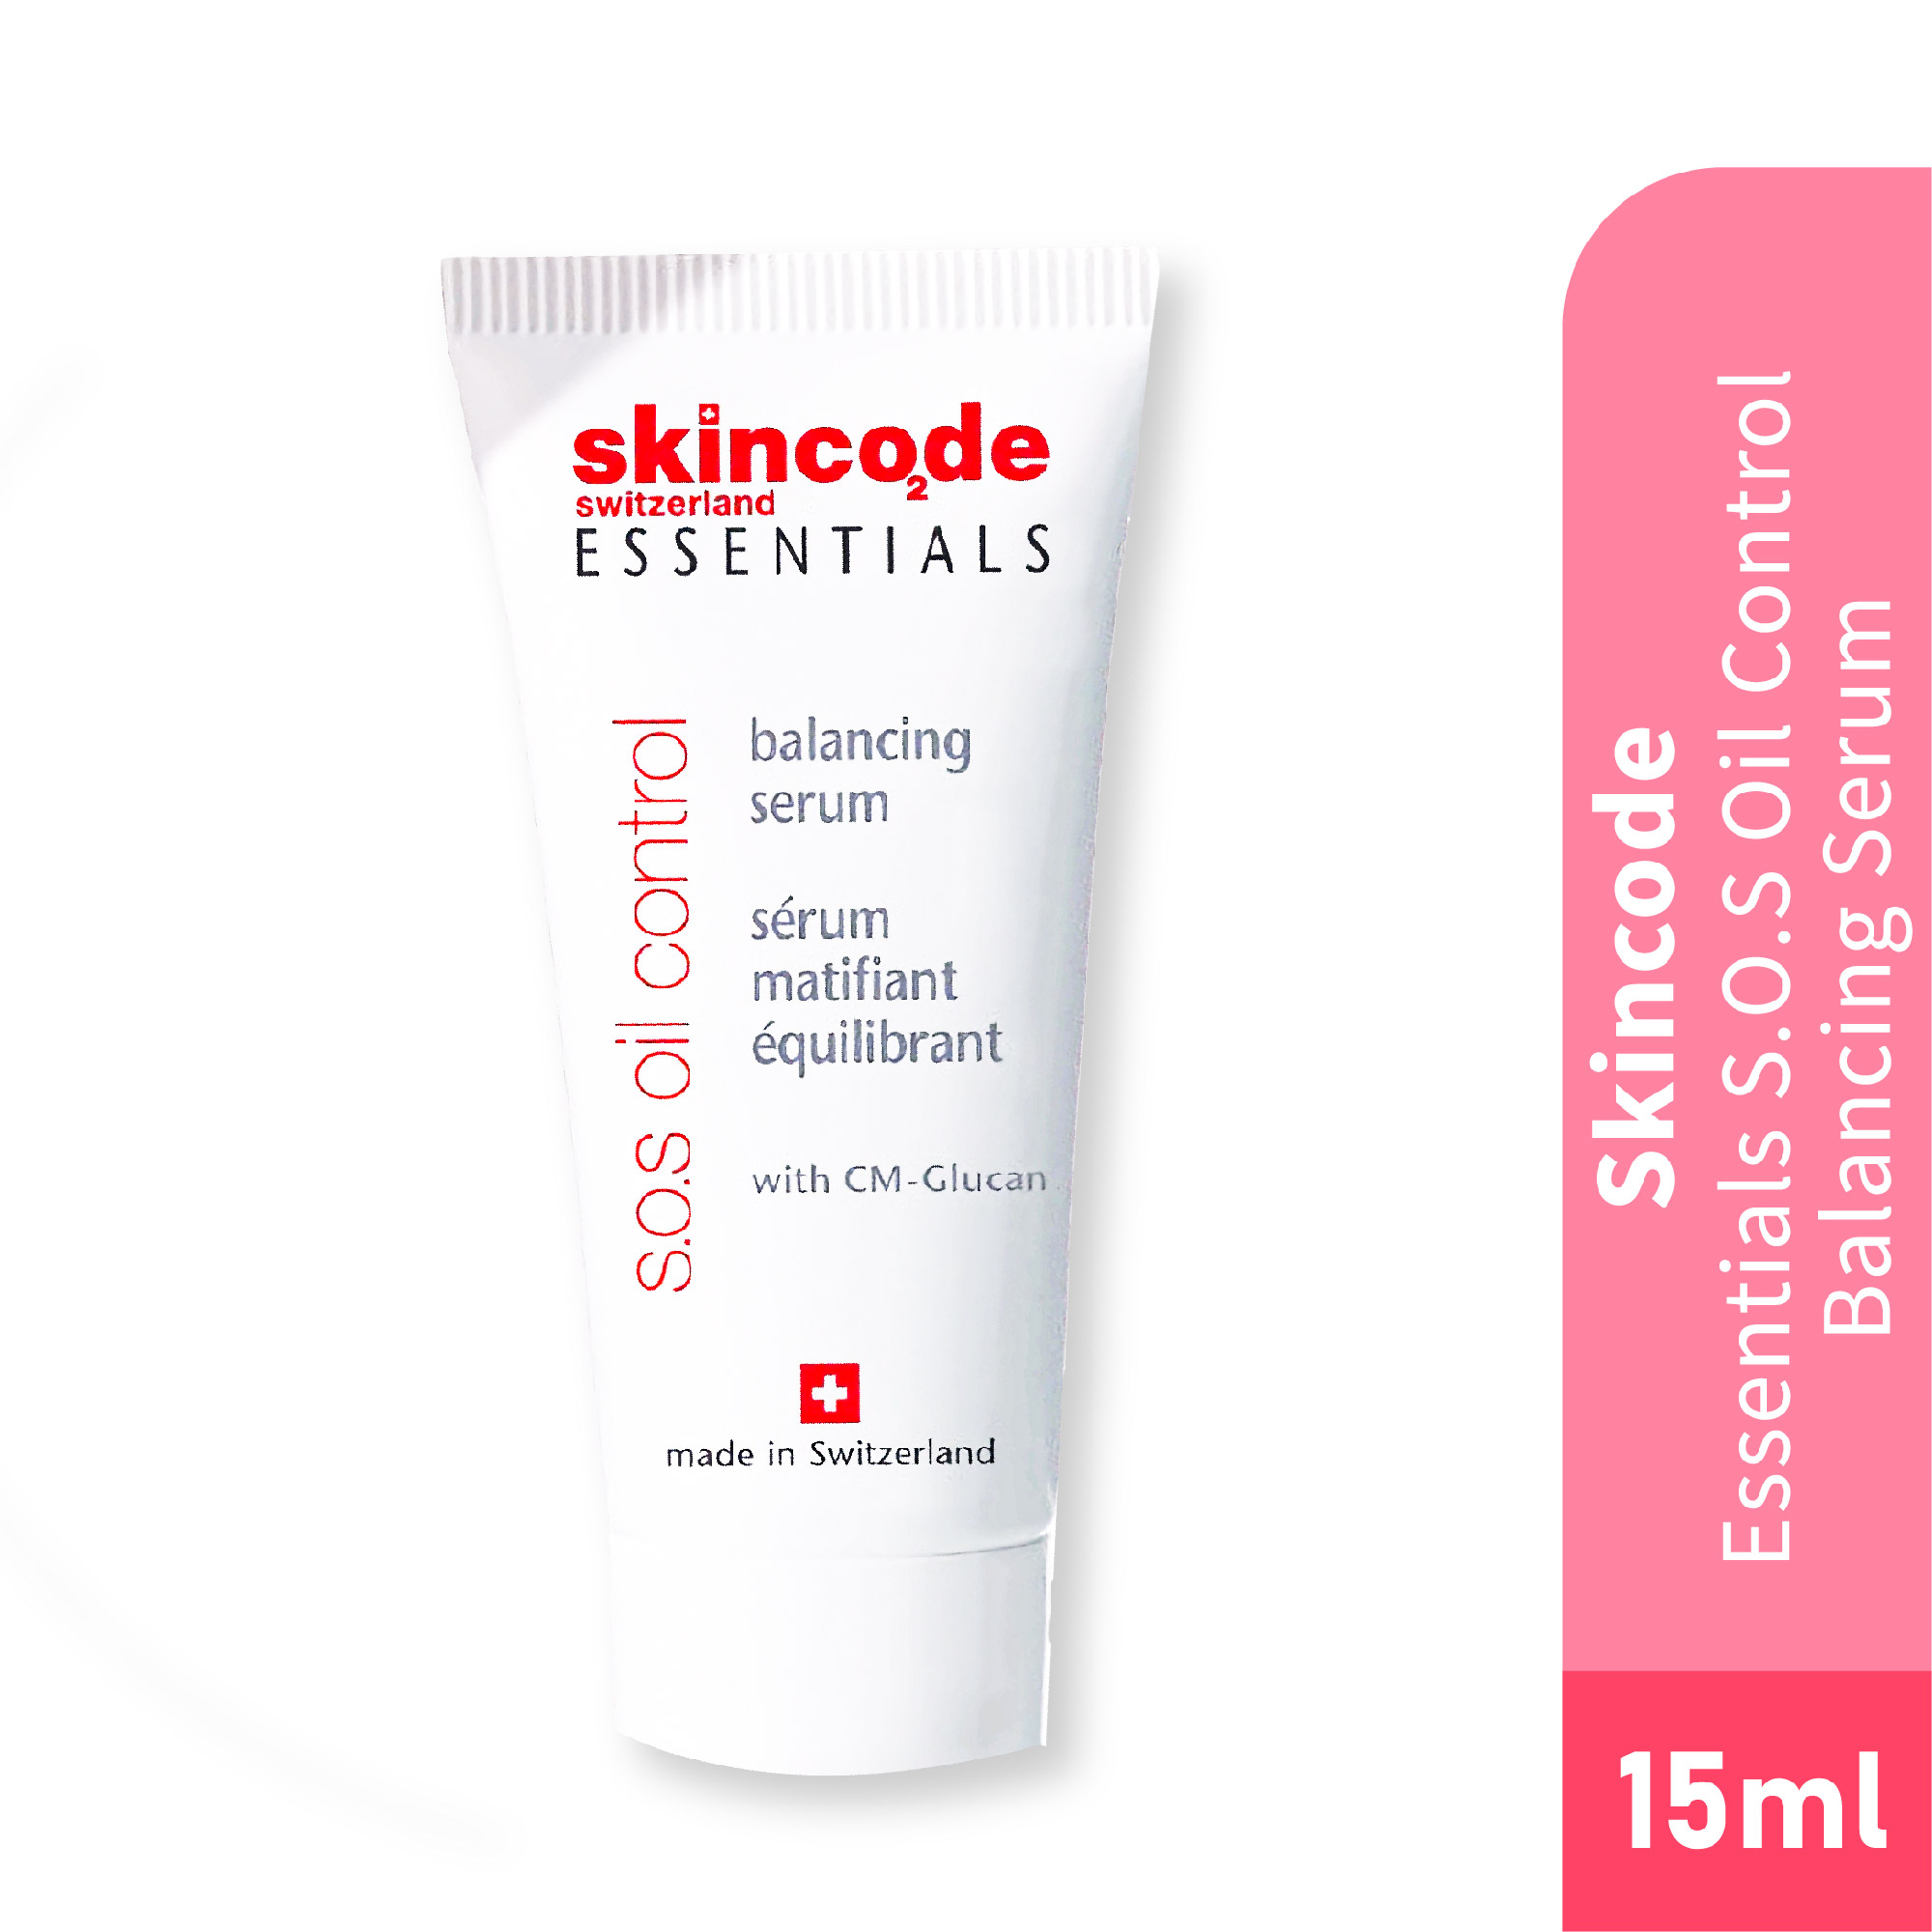 Skincode Essentials S.O.S Oil Control Balancing Serum 15ml